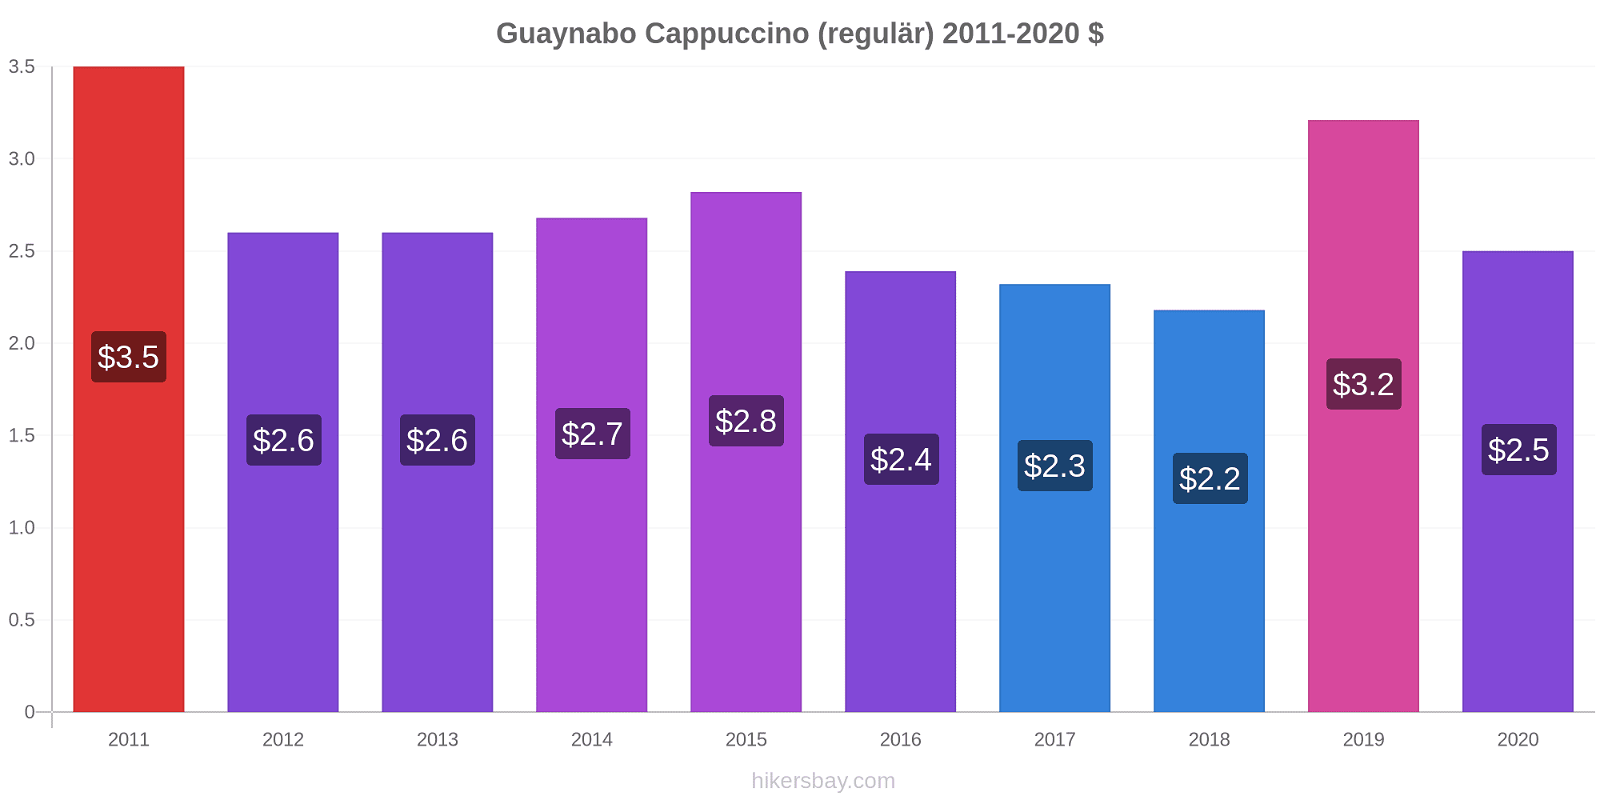 Guaynabo Preisänderungen Cappuccino (regulär) hikersbay.com